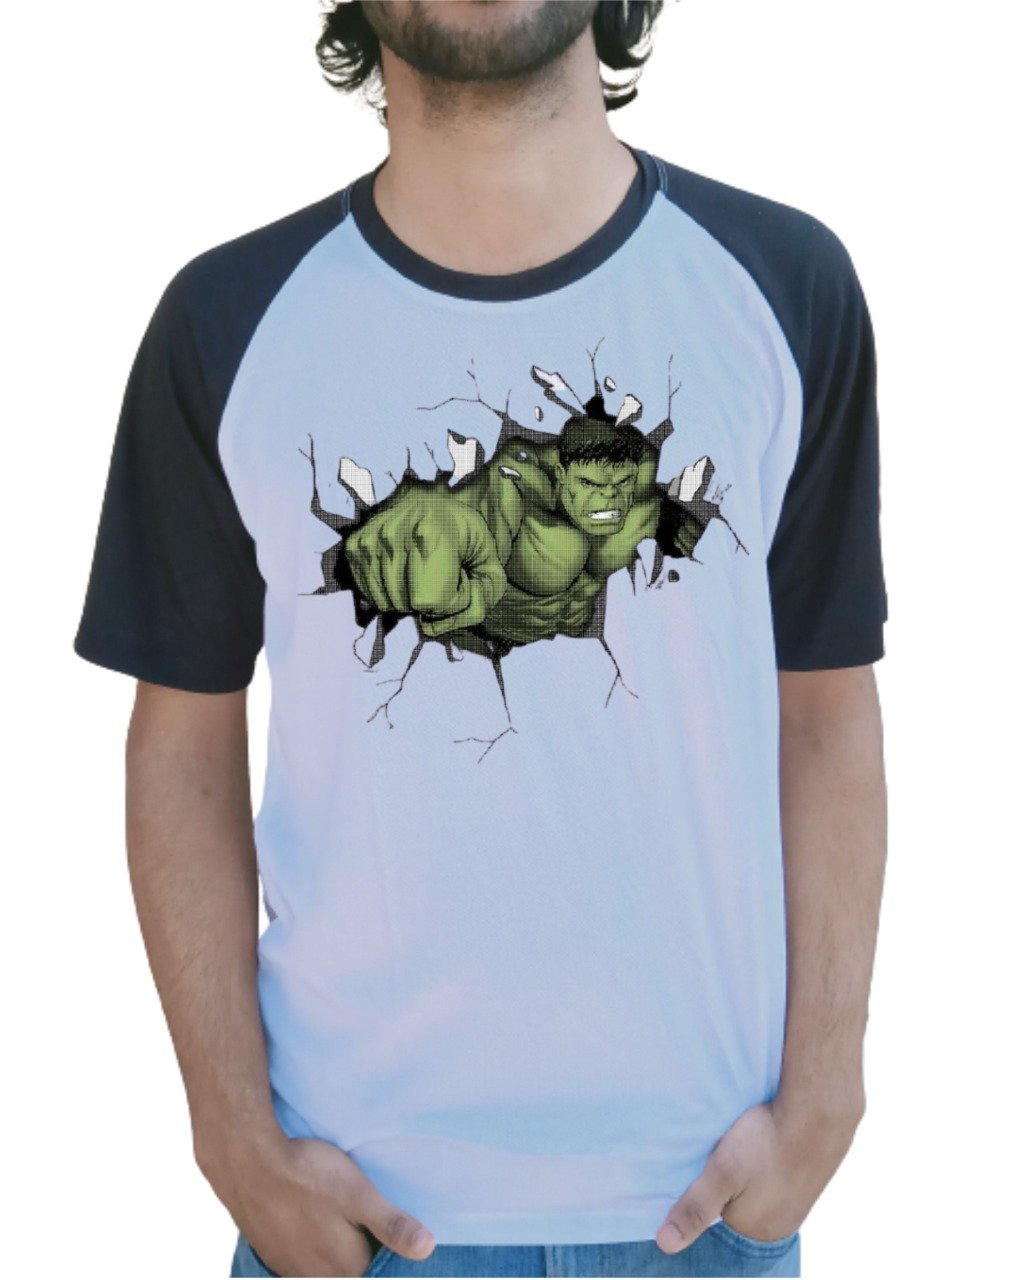 Smashing Hulk Half Sleeve T-Shirt Black & White